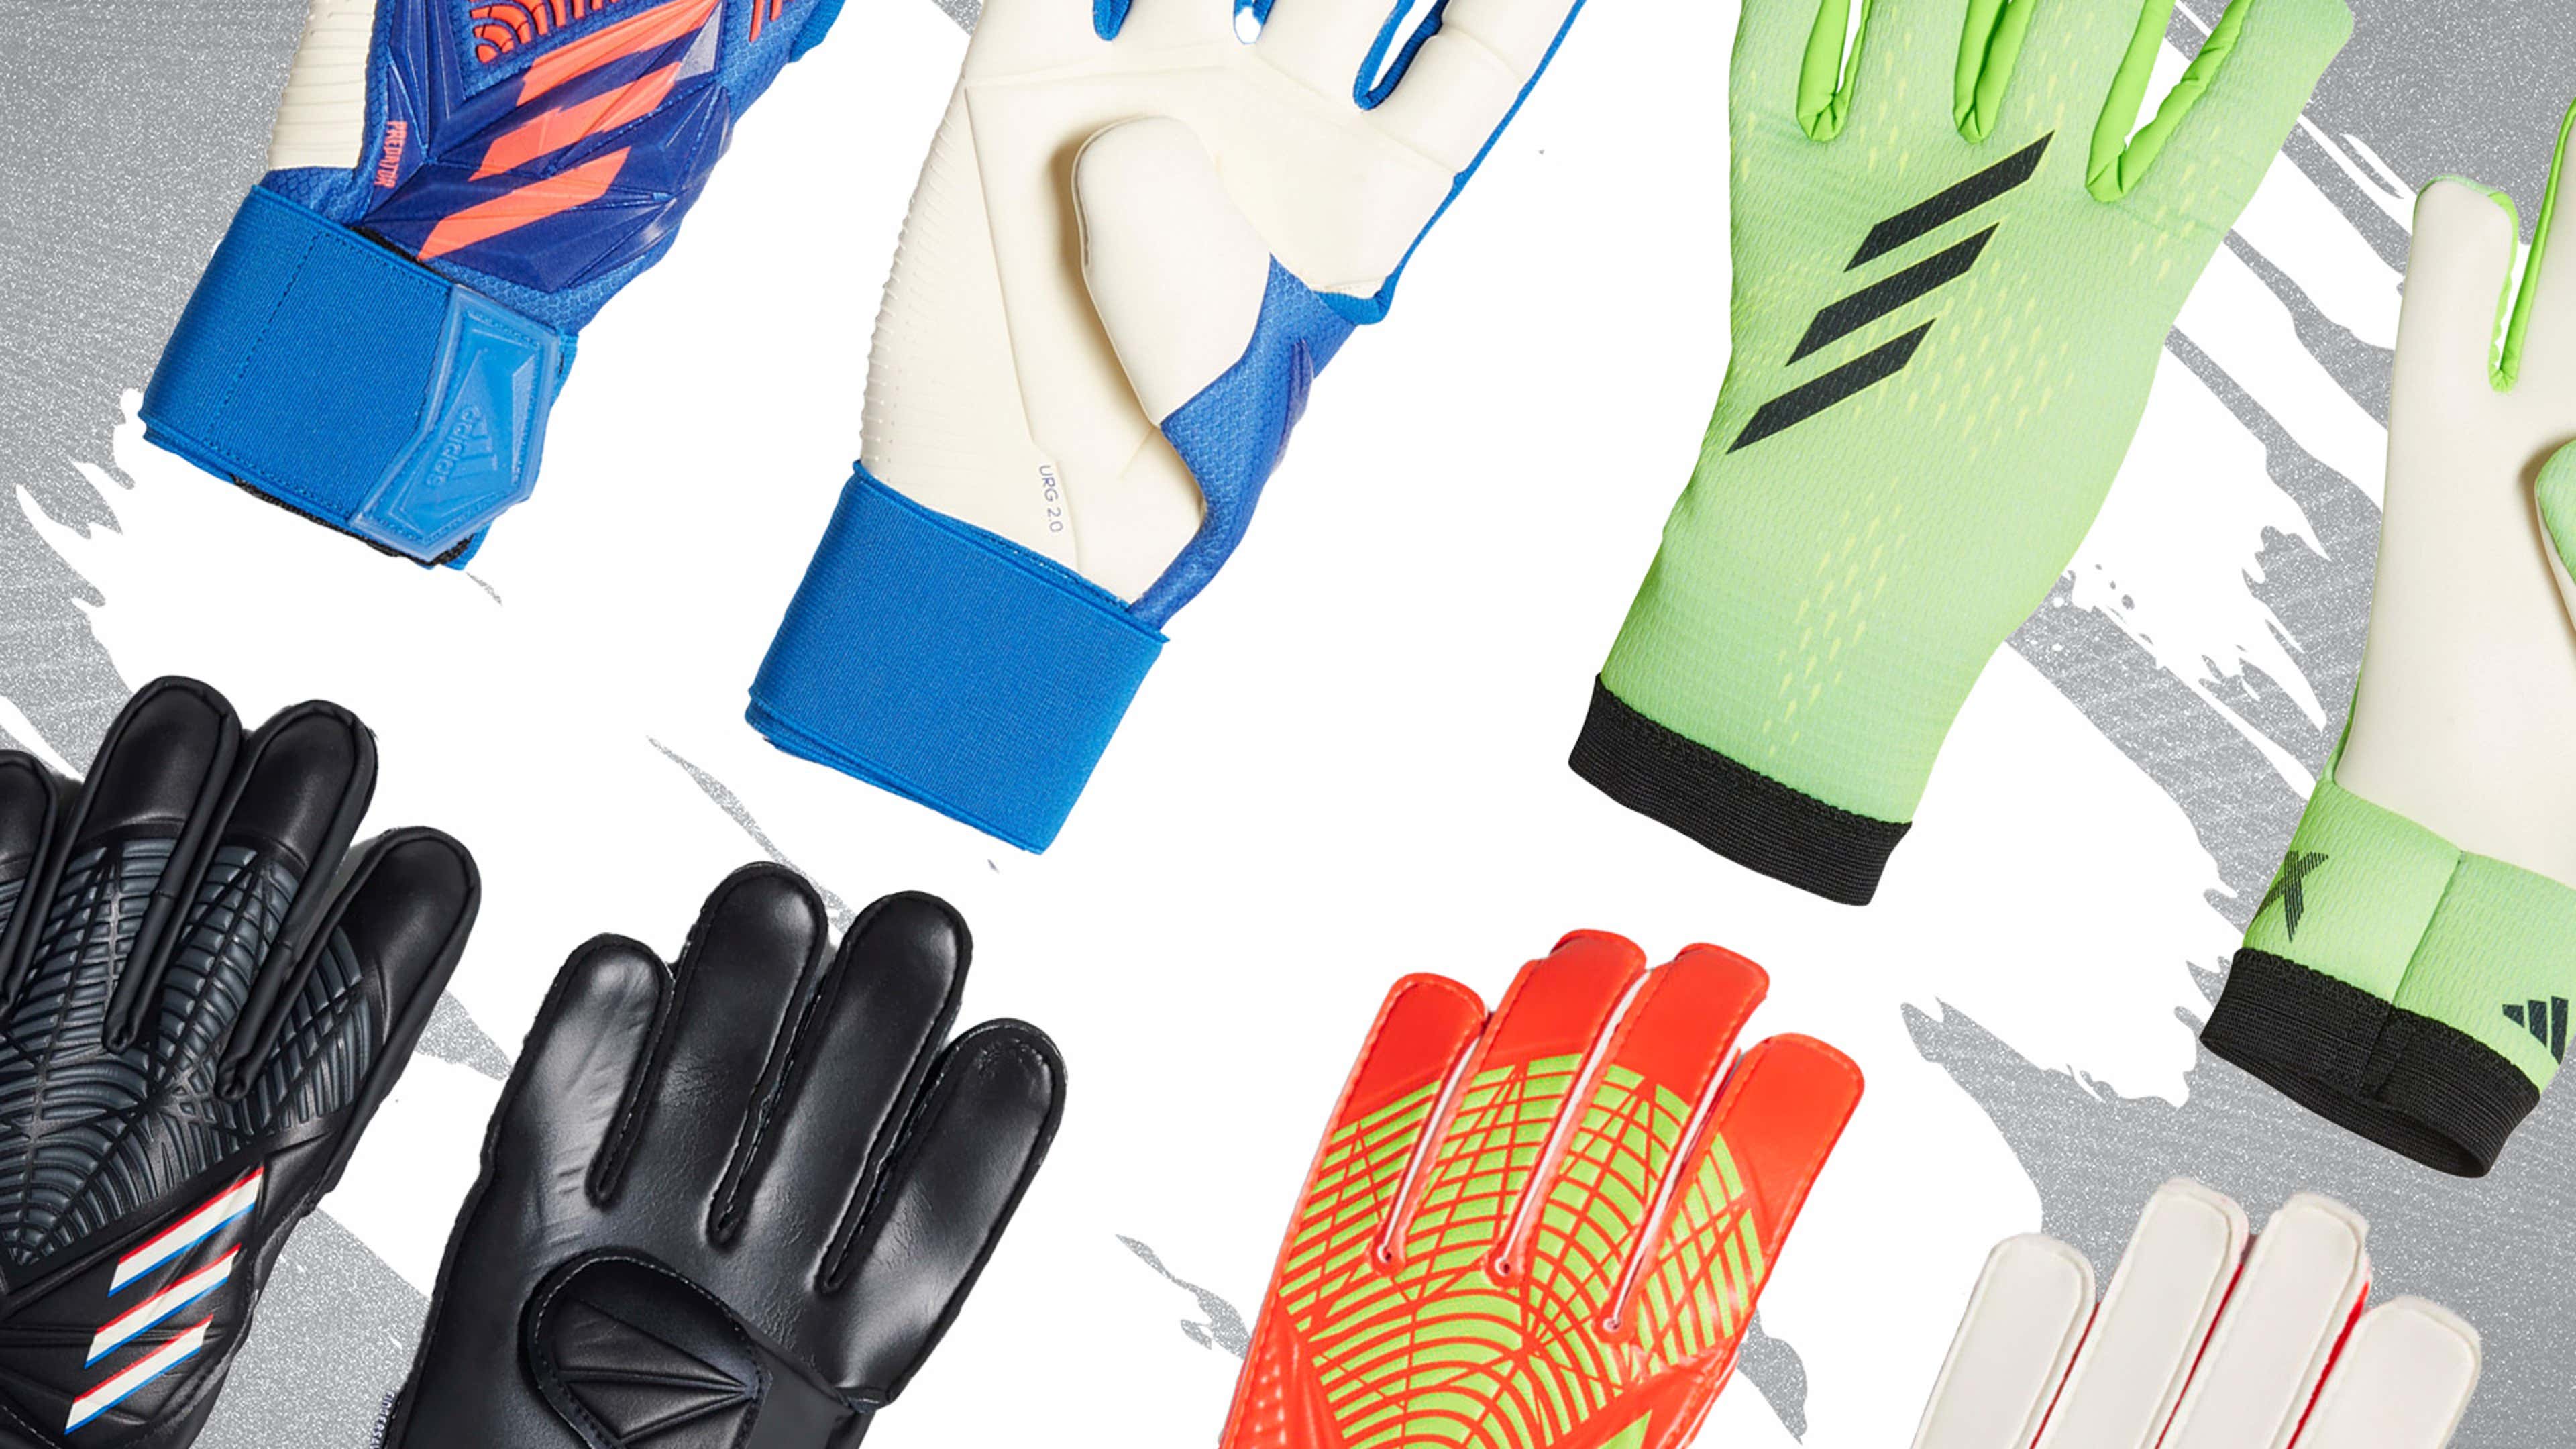 Best soccer goalkeeper gloves you can buy for kids in 2022